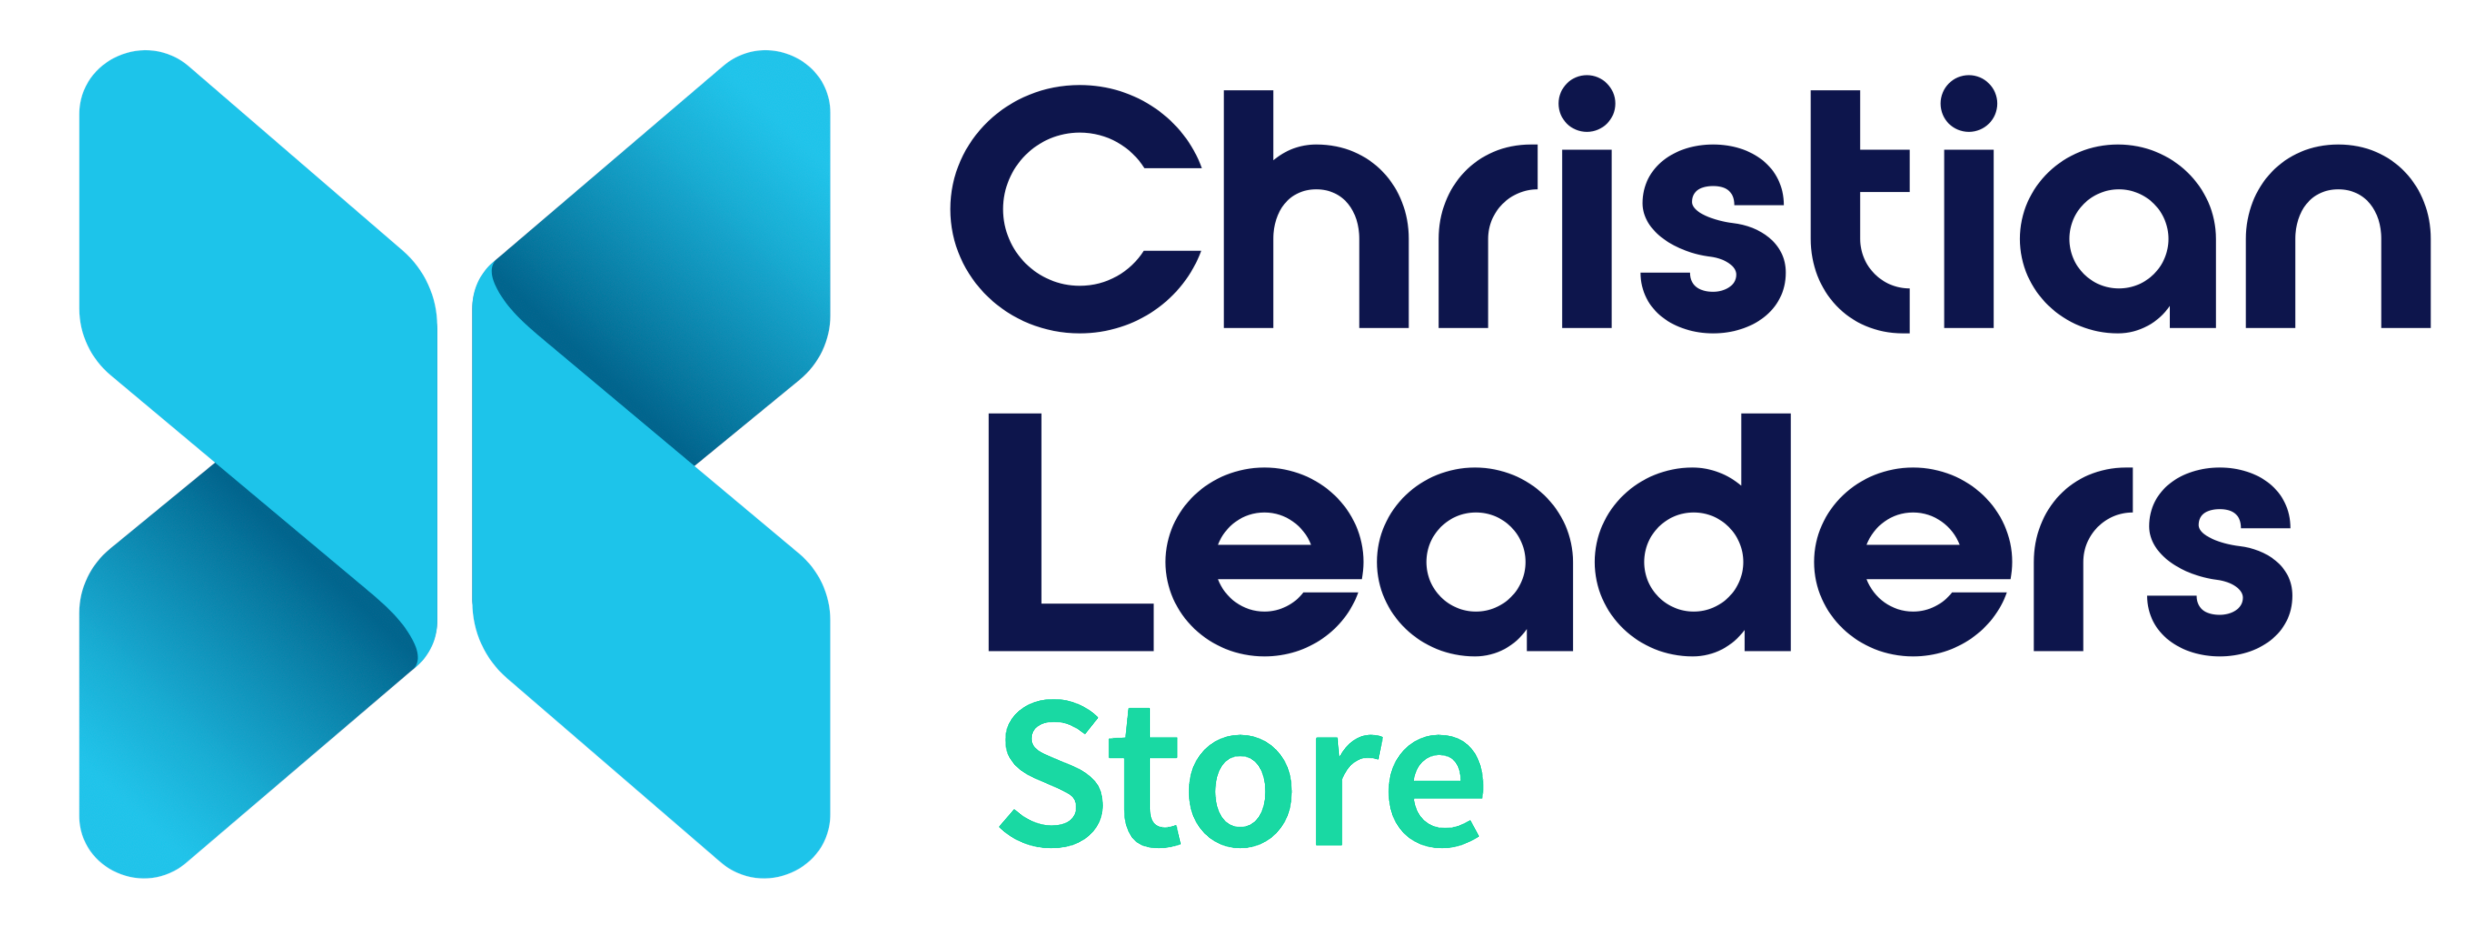 christian leadership images